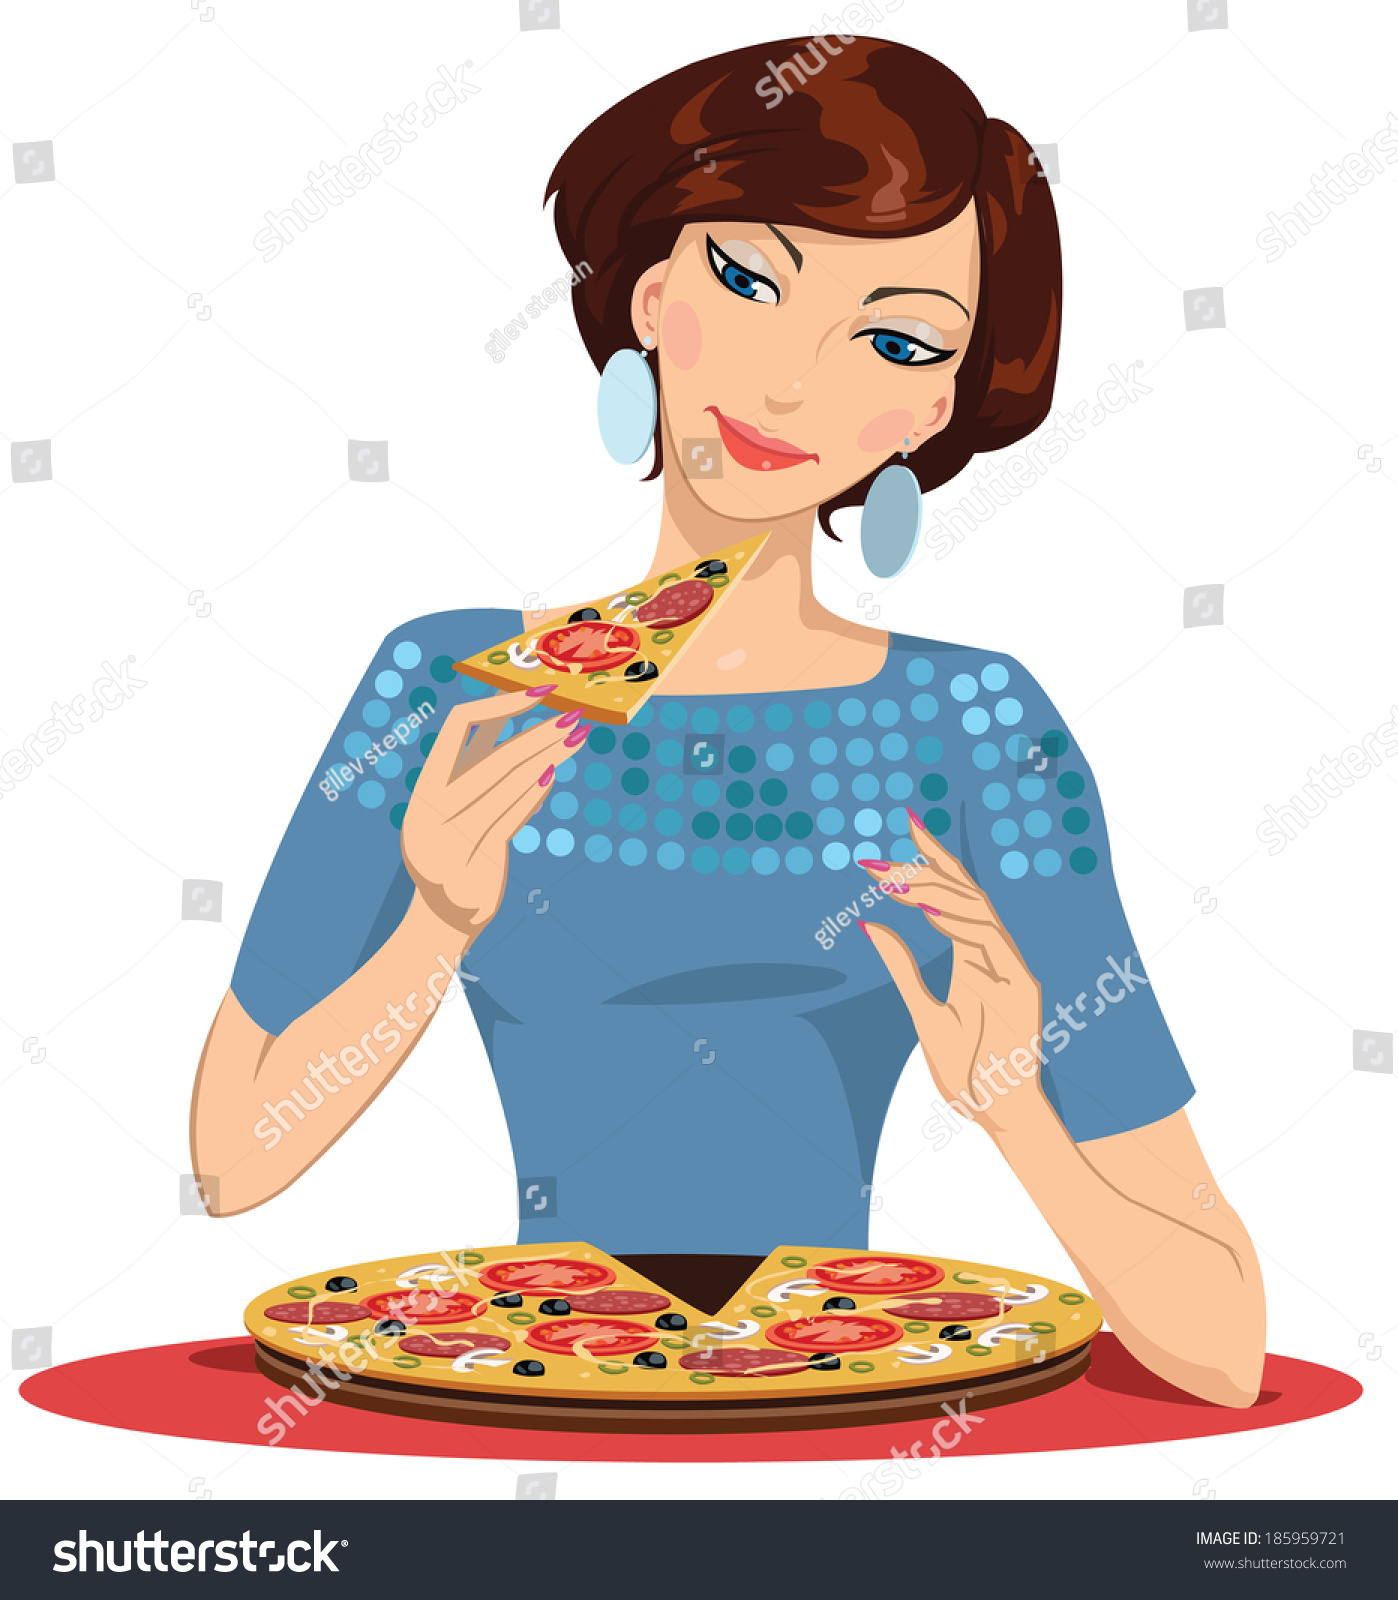 pizza girl clipart - photo #16